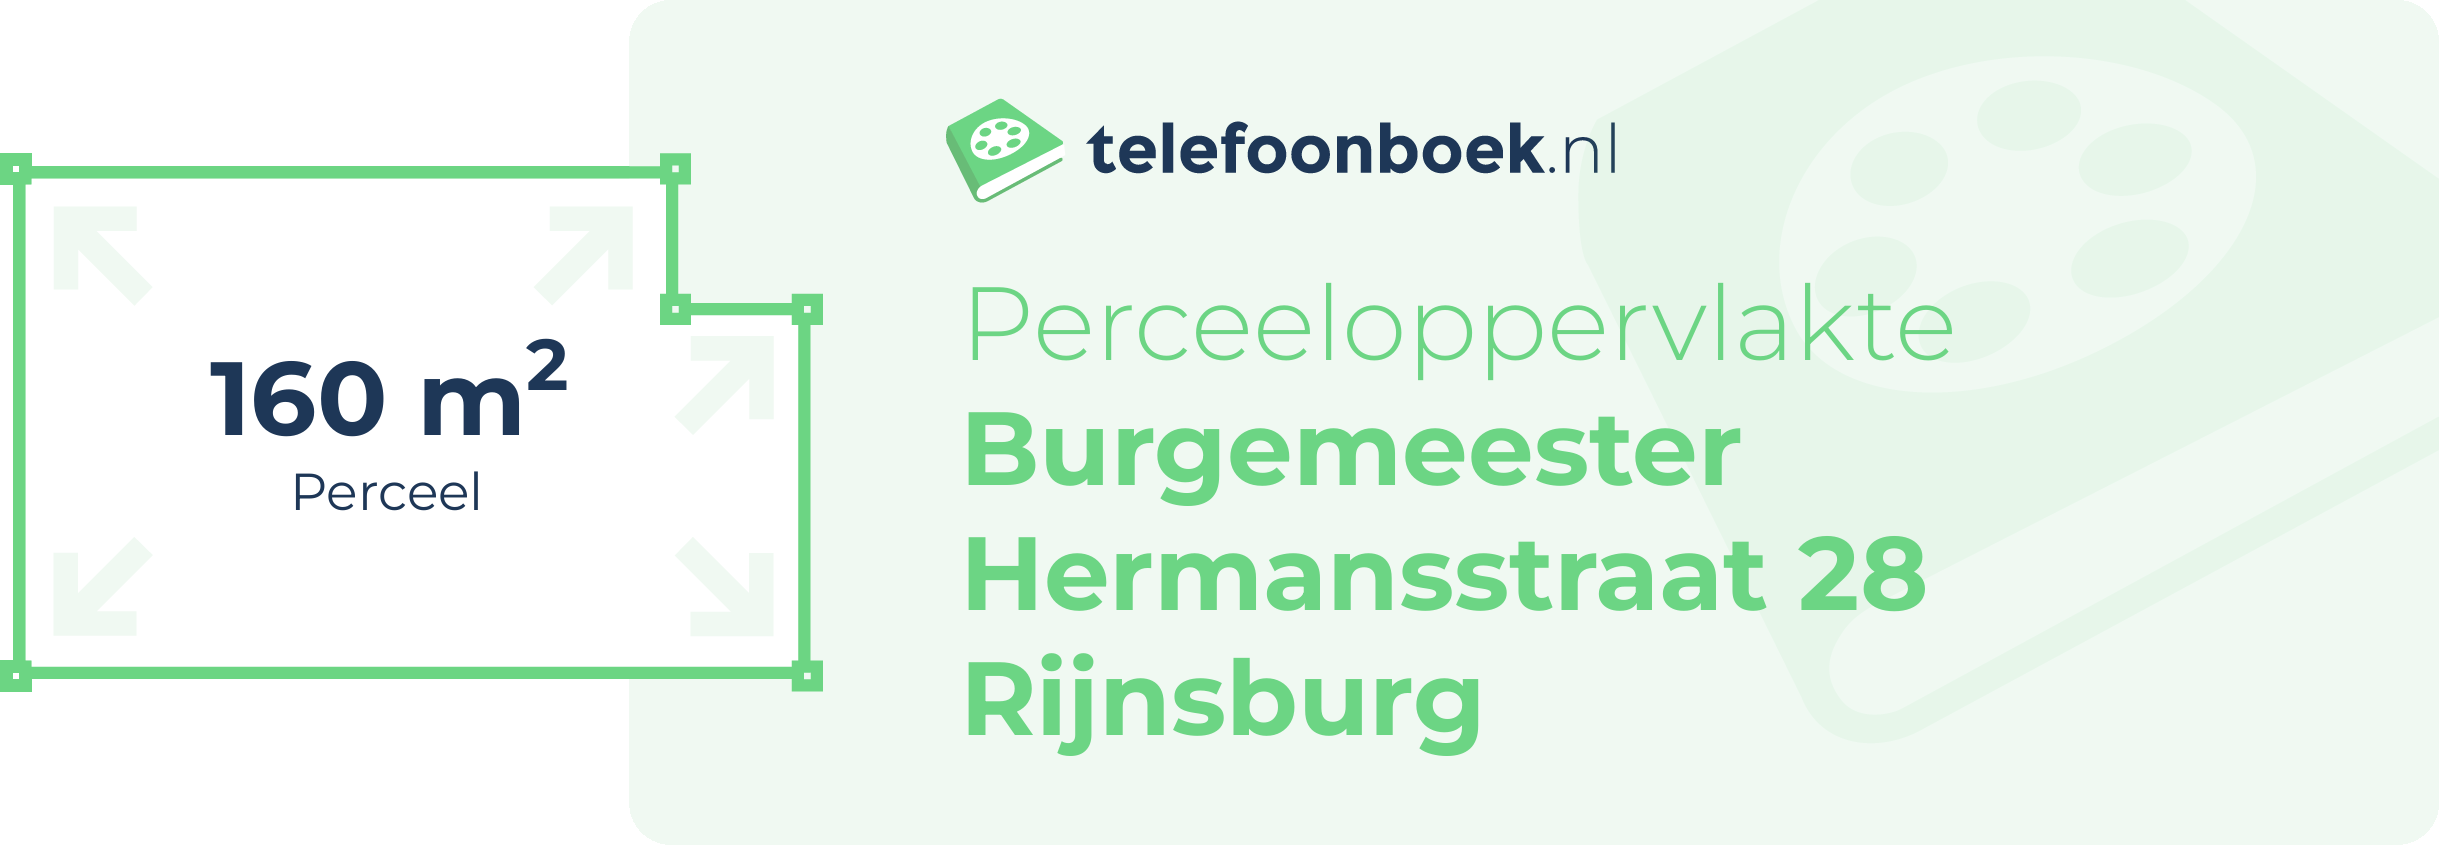 Perceeloppervlakte Burgemeester Hermansstraat 28 Rijnsburg